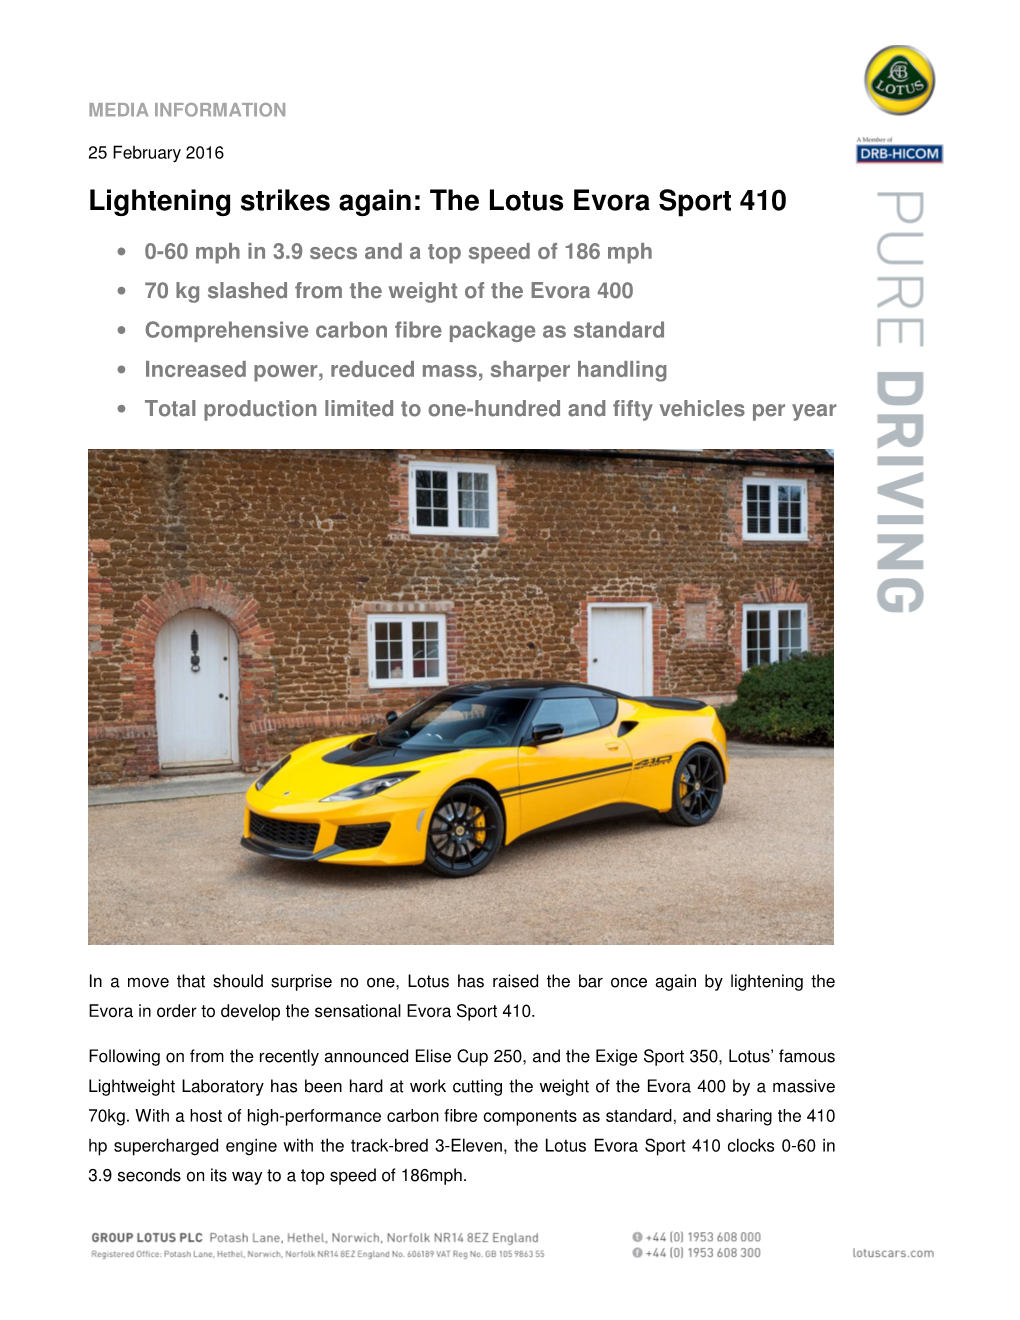 Lightening Strikes Again: the Lotus Evora Sport 410